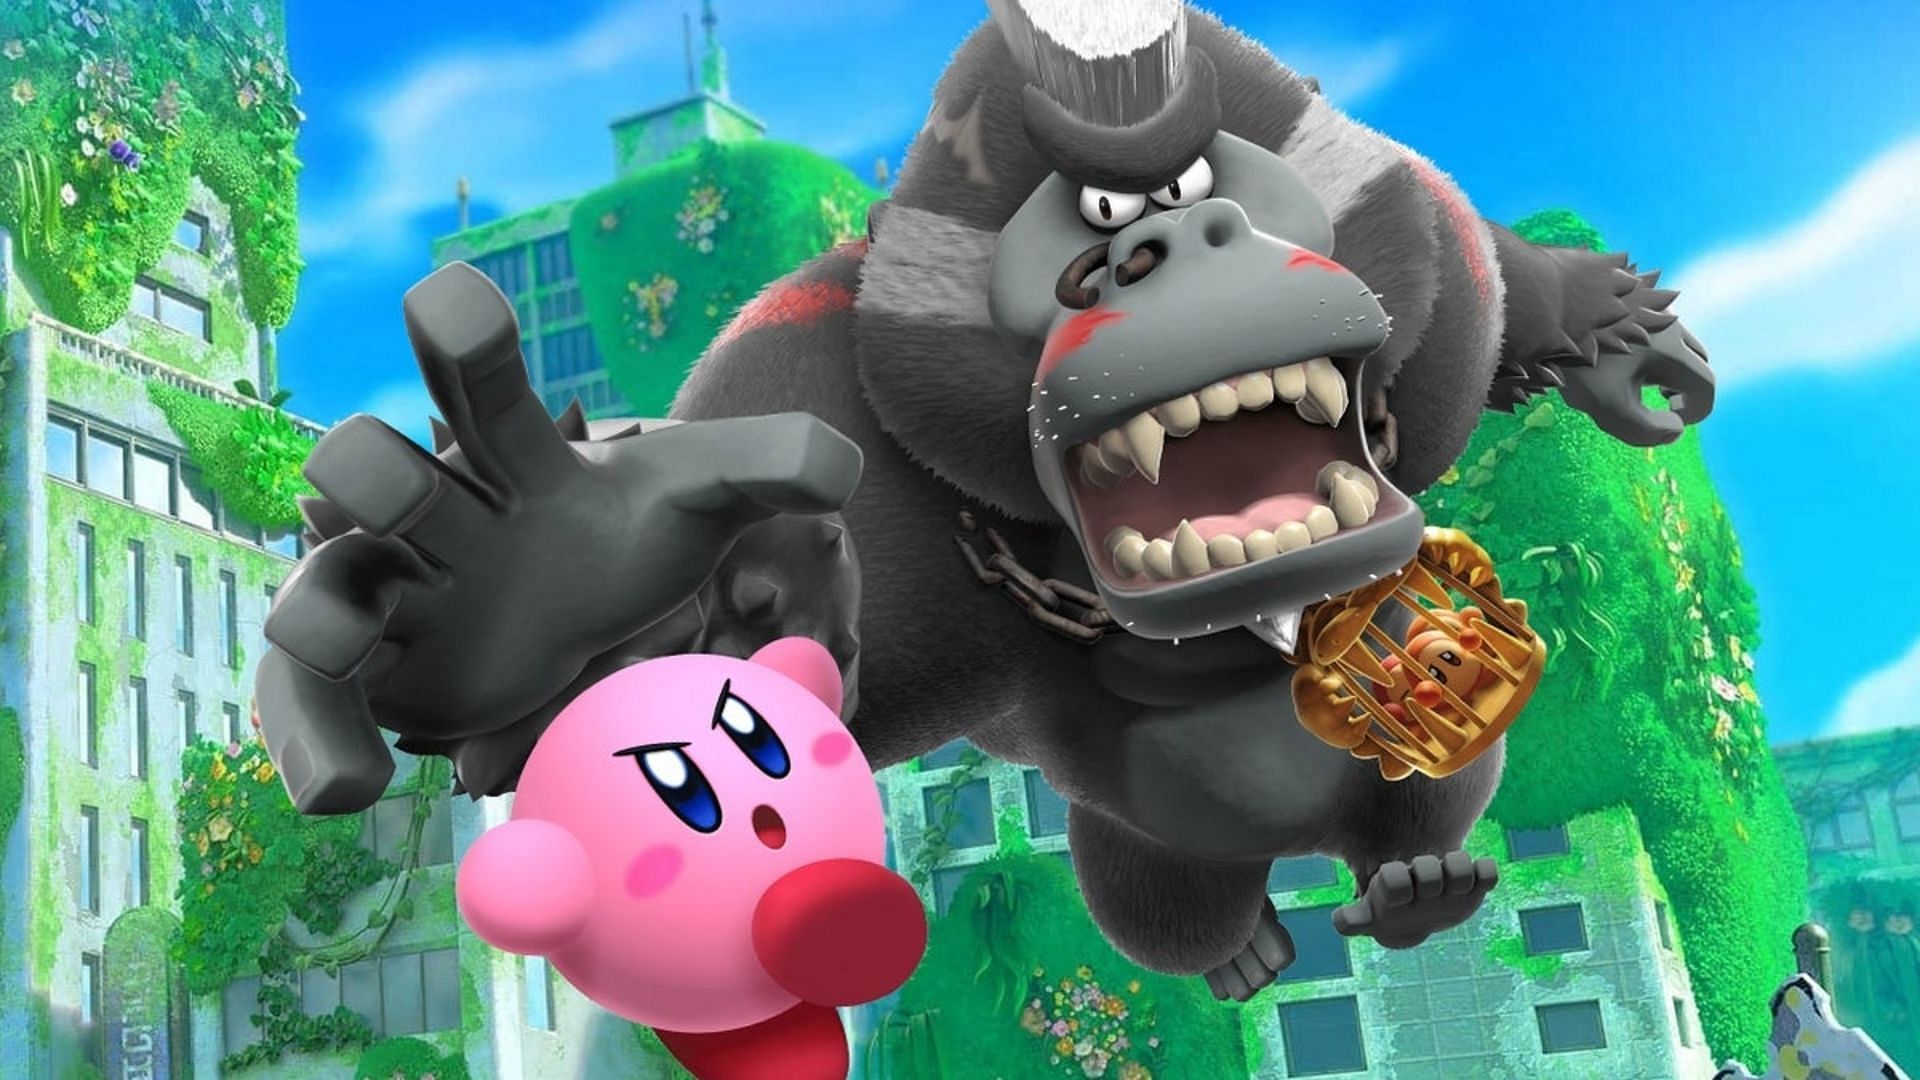 Second round with the giant ape (Image via Nintendo)